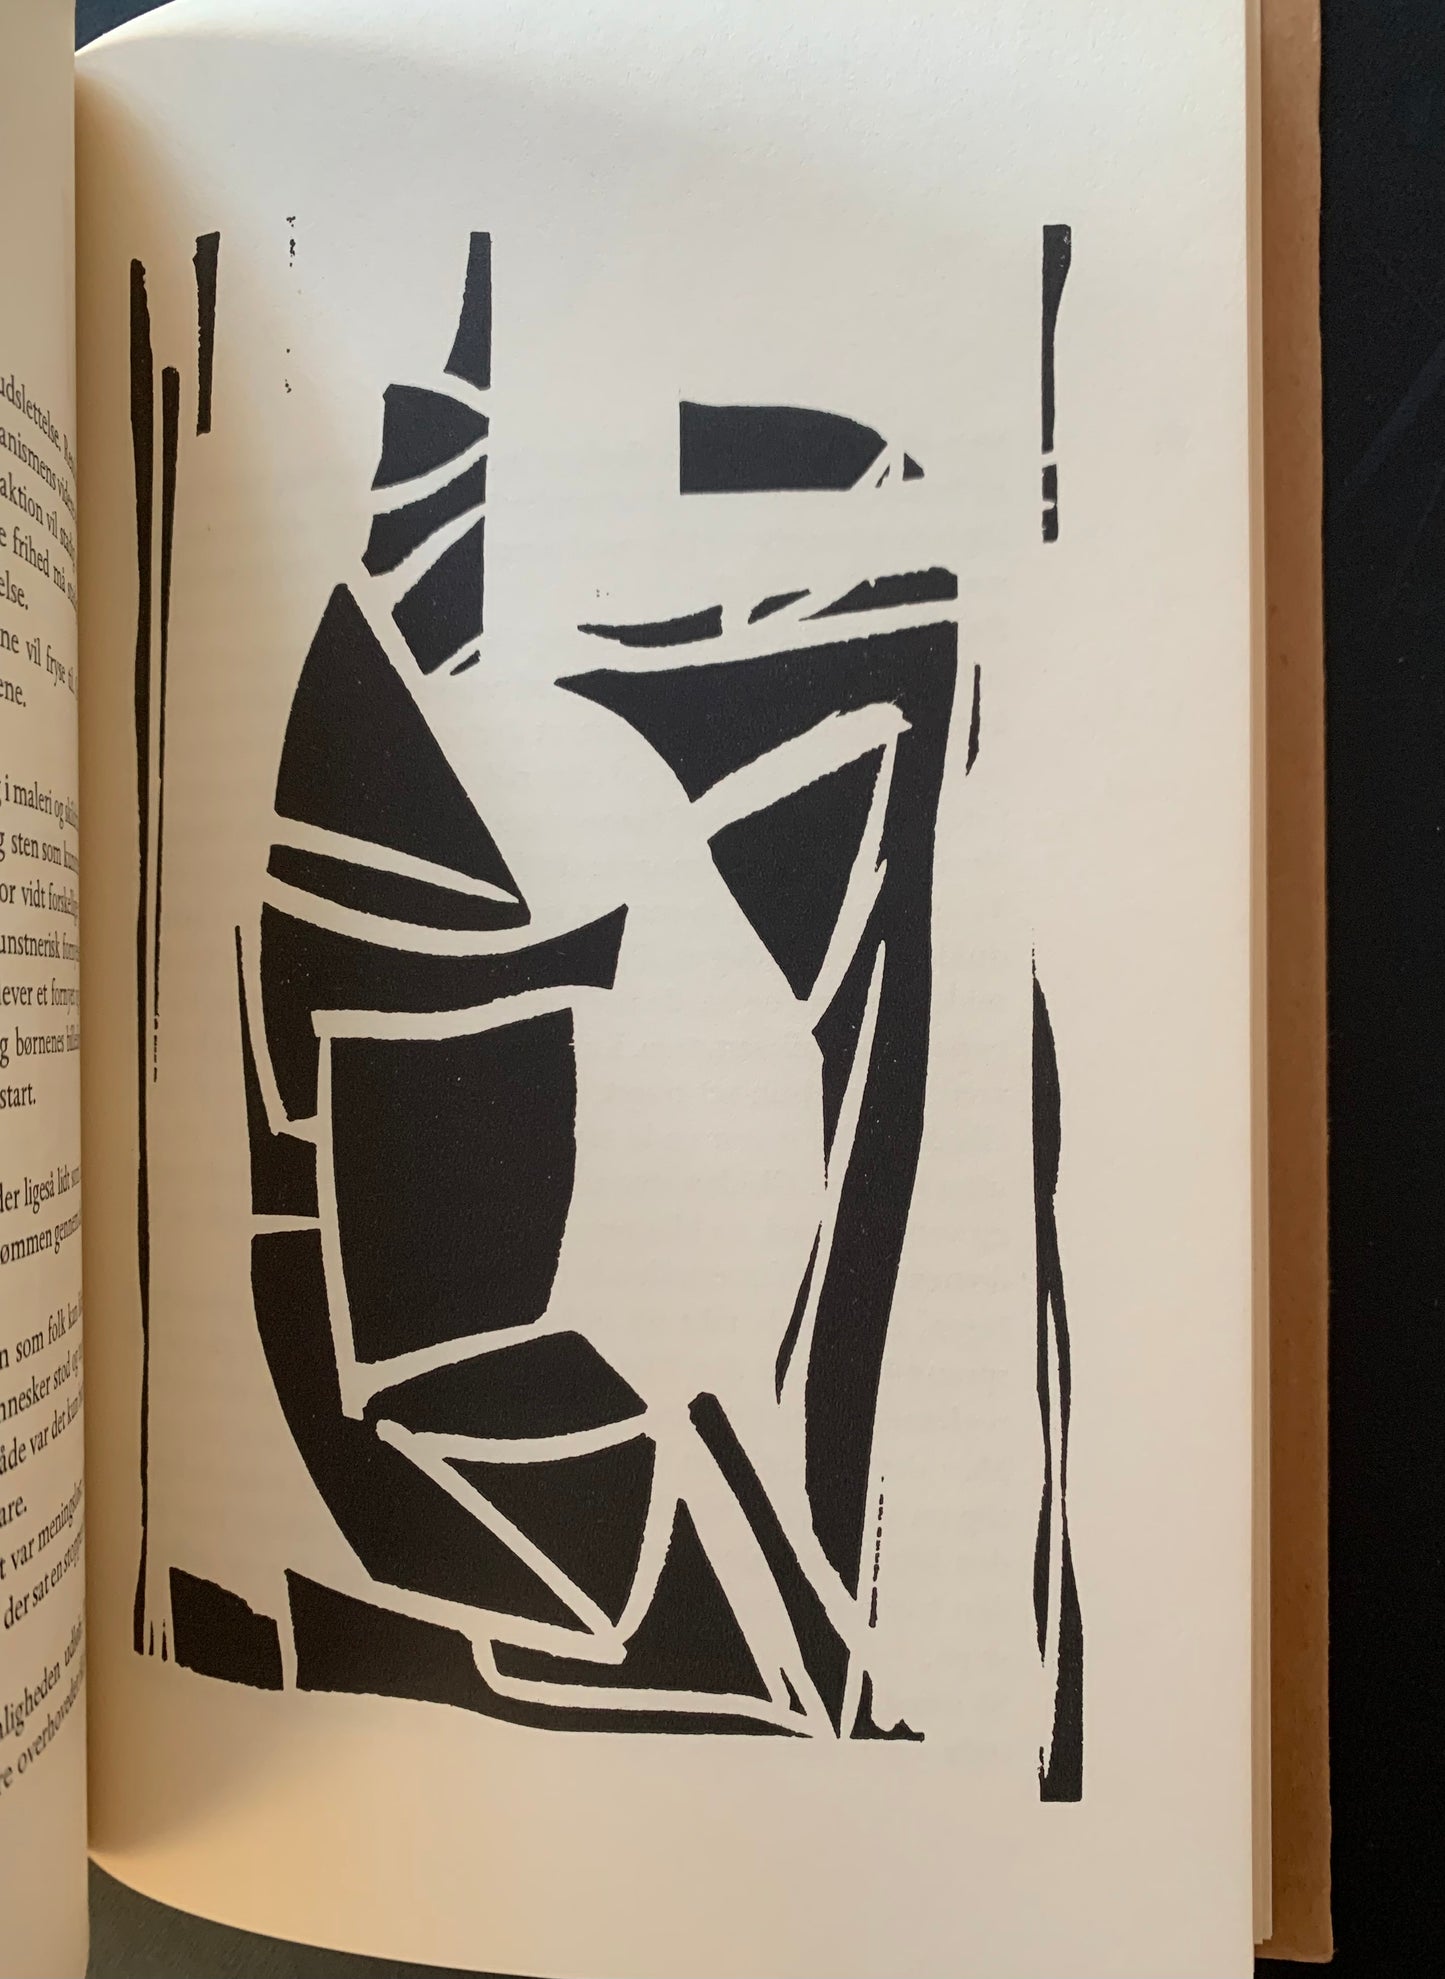 Egon Mathiesen. “Bag om staffeliet”, 1962